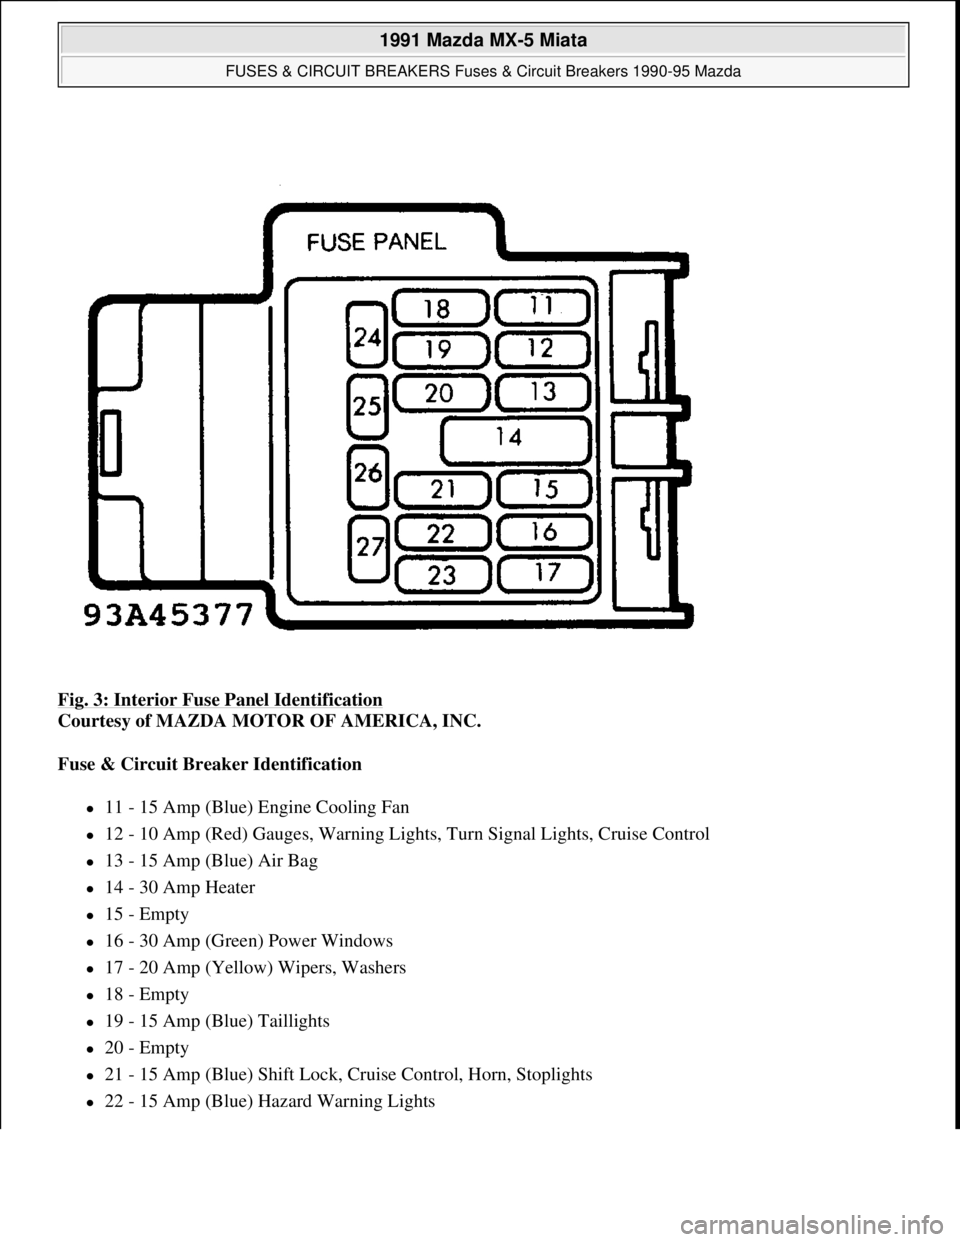 MAZDA MIATA 1991  Factory Service Manual Fig. 3: Interior Fuse Panel Identification 
Courtesy of MAZDA MOTOR OF AMERICA, INC. 
Fuse & Circuit Breaker Identification  
11 - 15 Amp (Blue) Engine Cooling Fan  
12 - 10 Amp (Red) Gauges, Wa